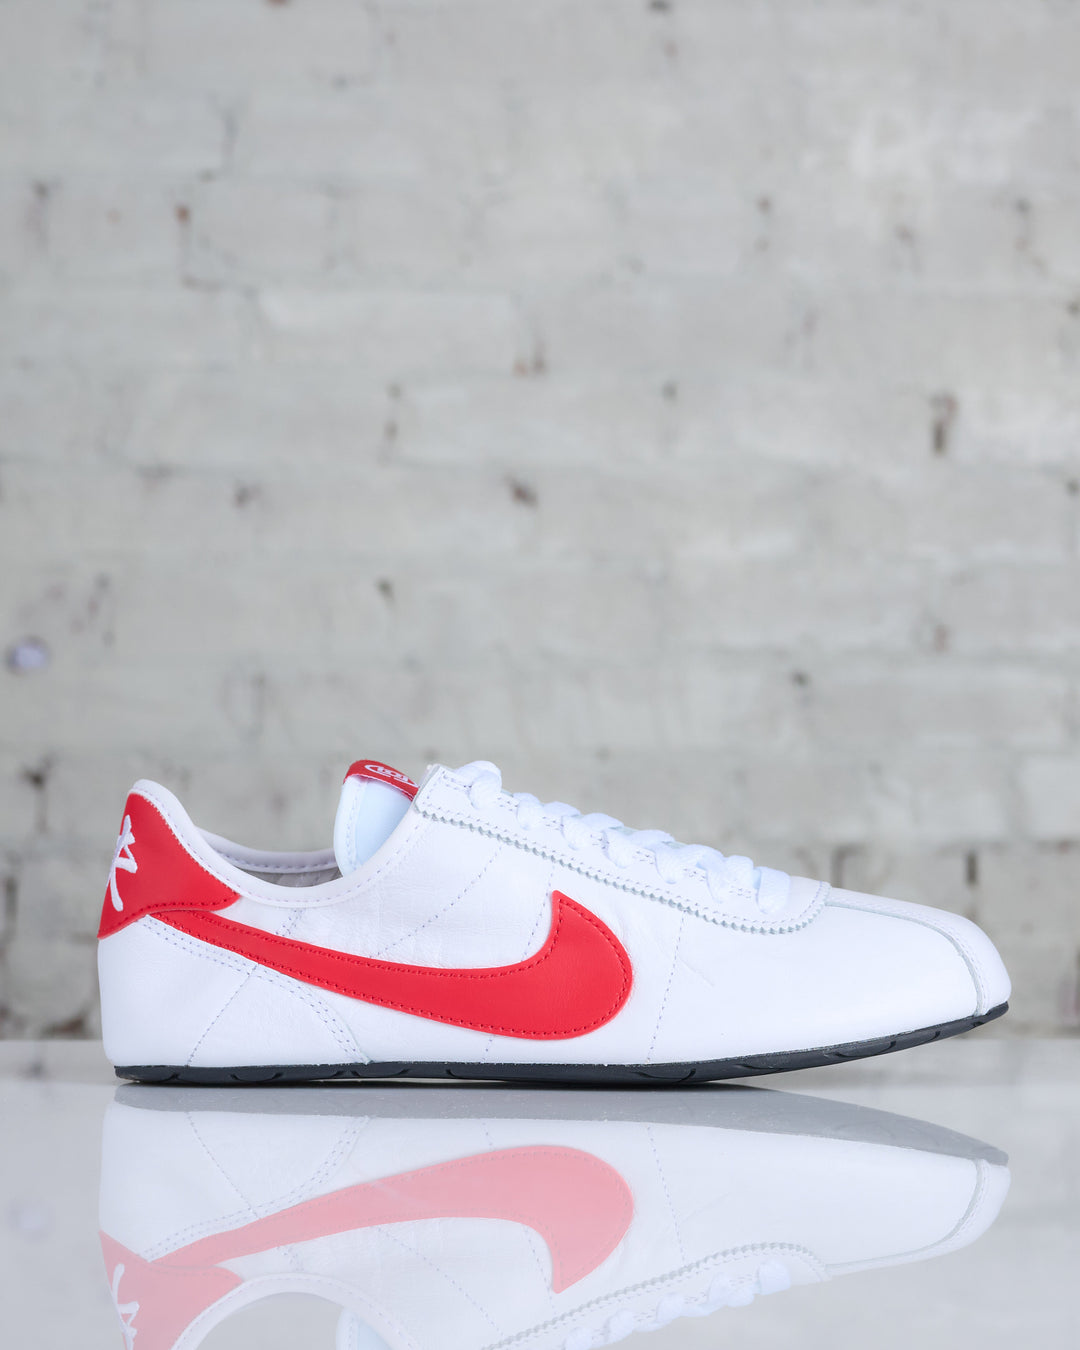 Nike Men's Cortez SP / CLOT White/Game Royal-University Red